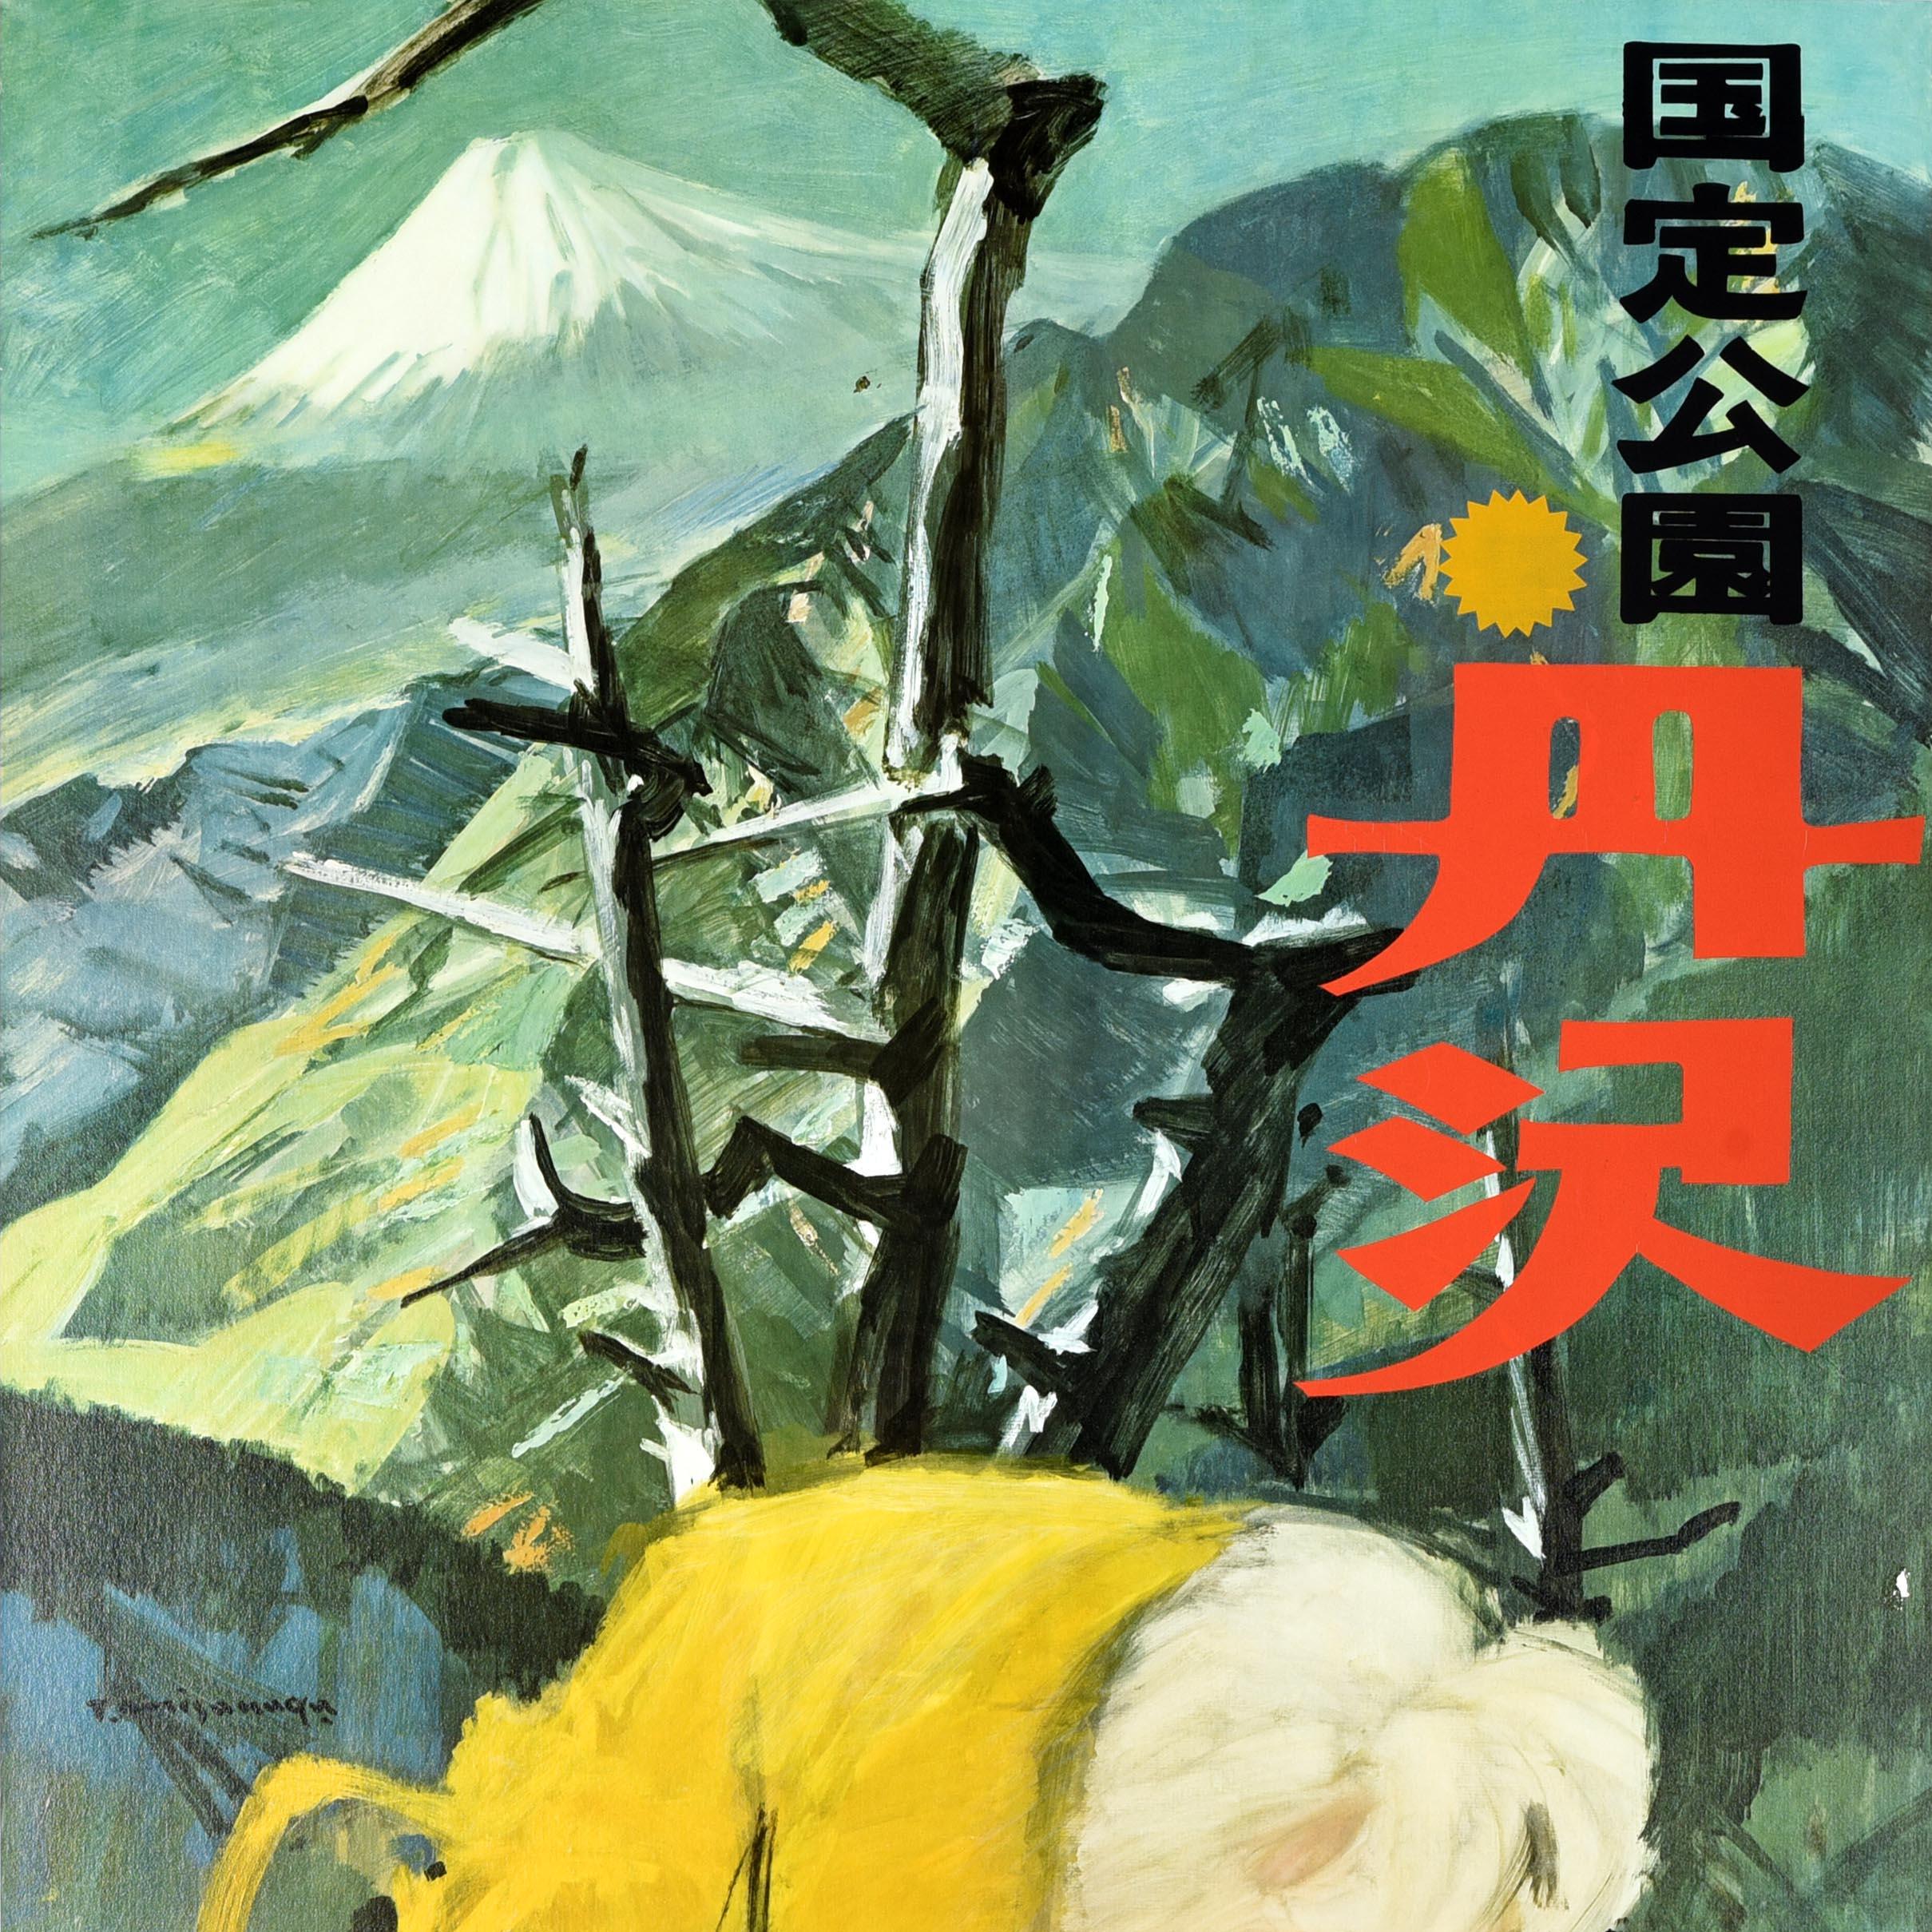 Japanese Original Vintage Travel Poster Tanzawa Mountains Kanto National Park Japan Art For Sale